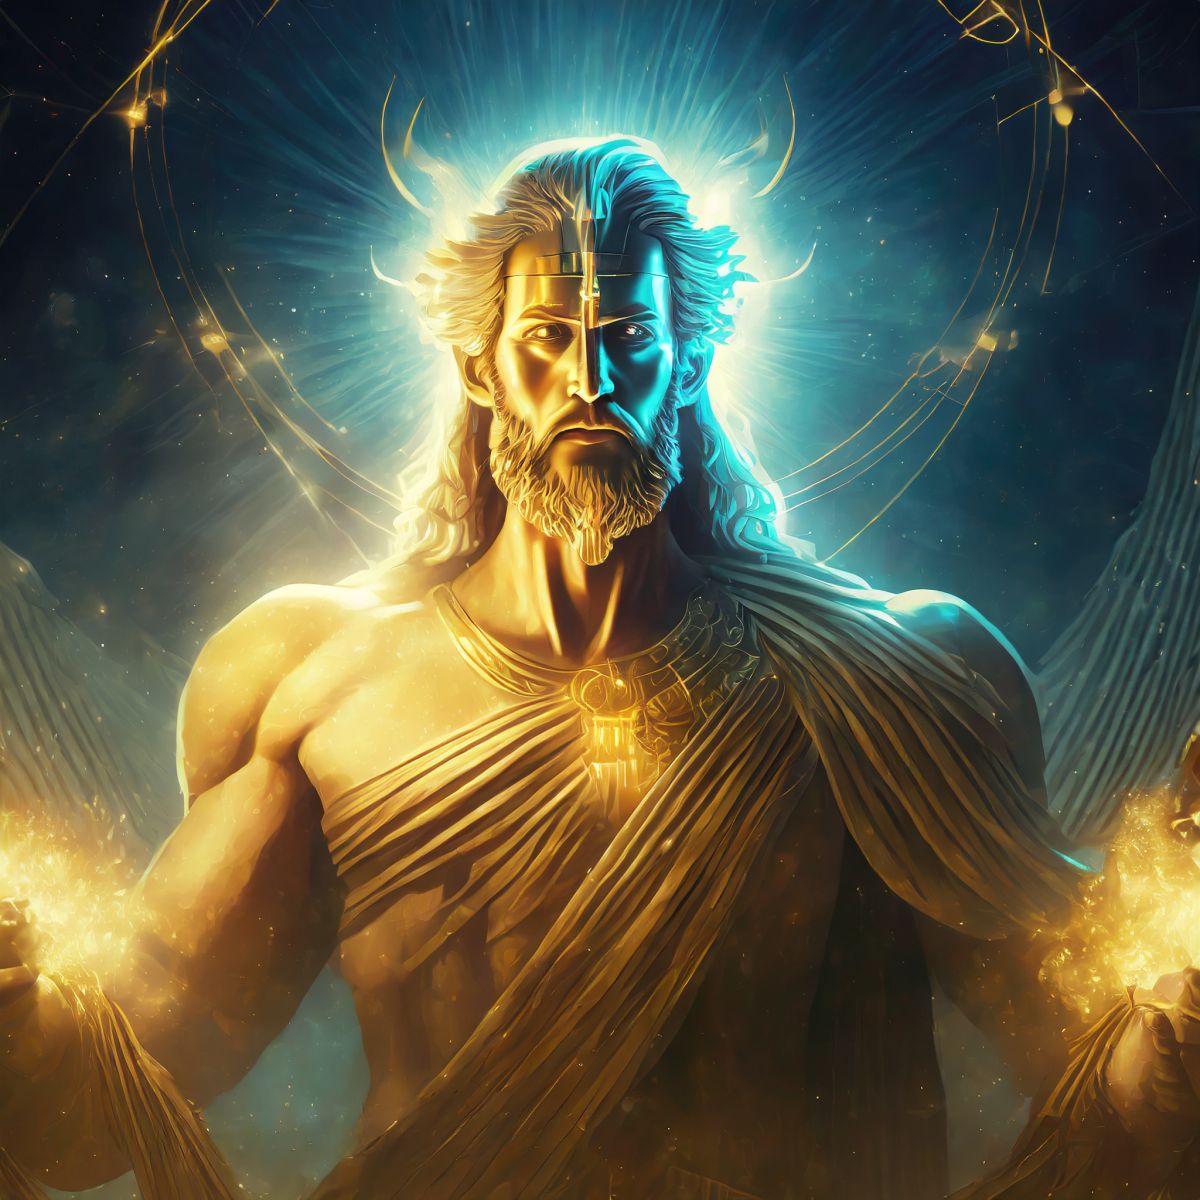 A portrait of Zeus, King of the Gods.